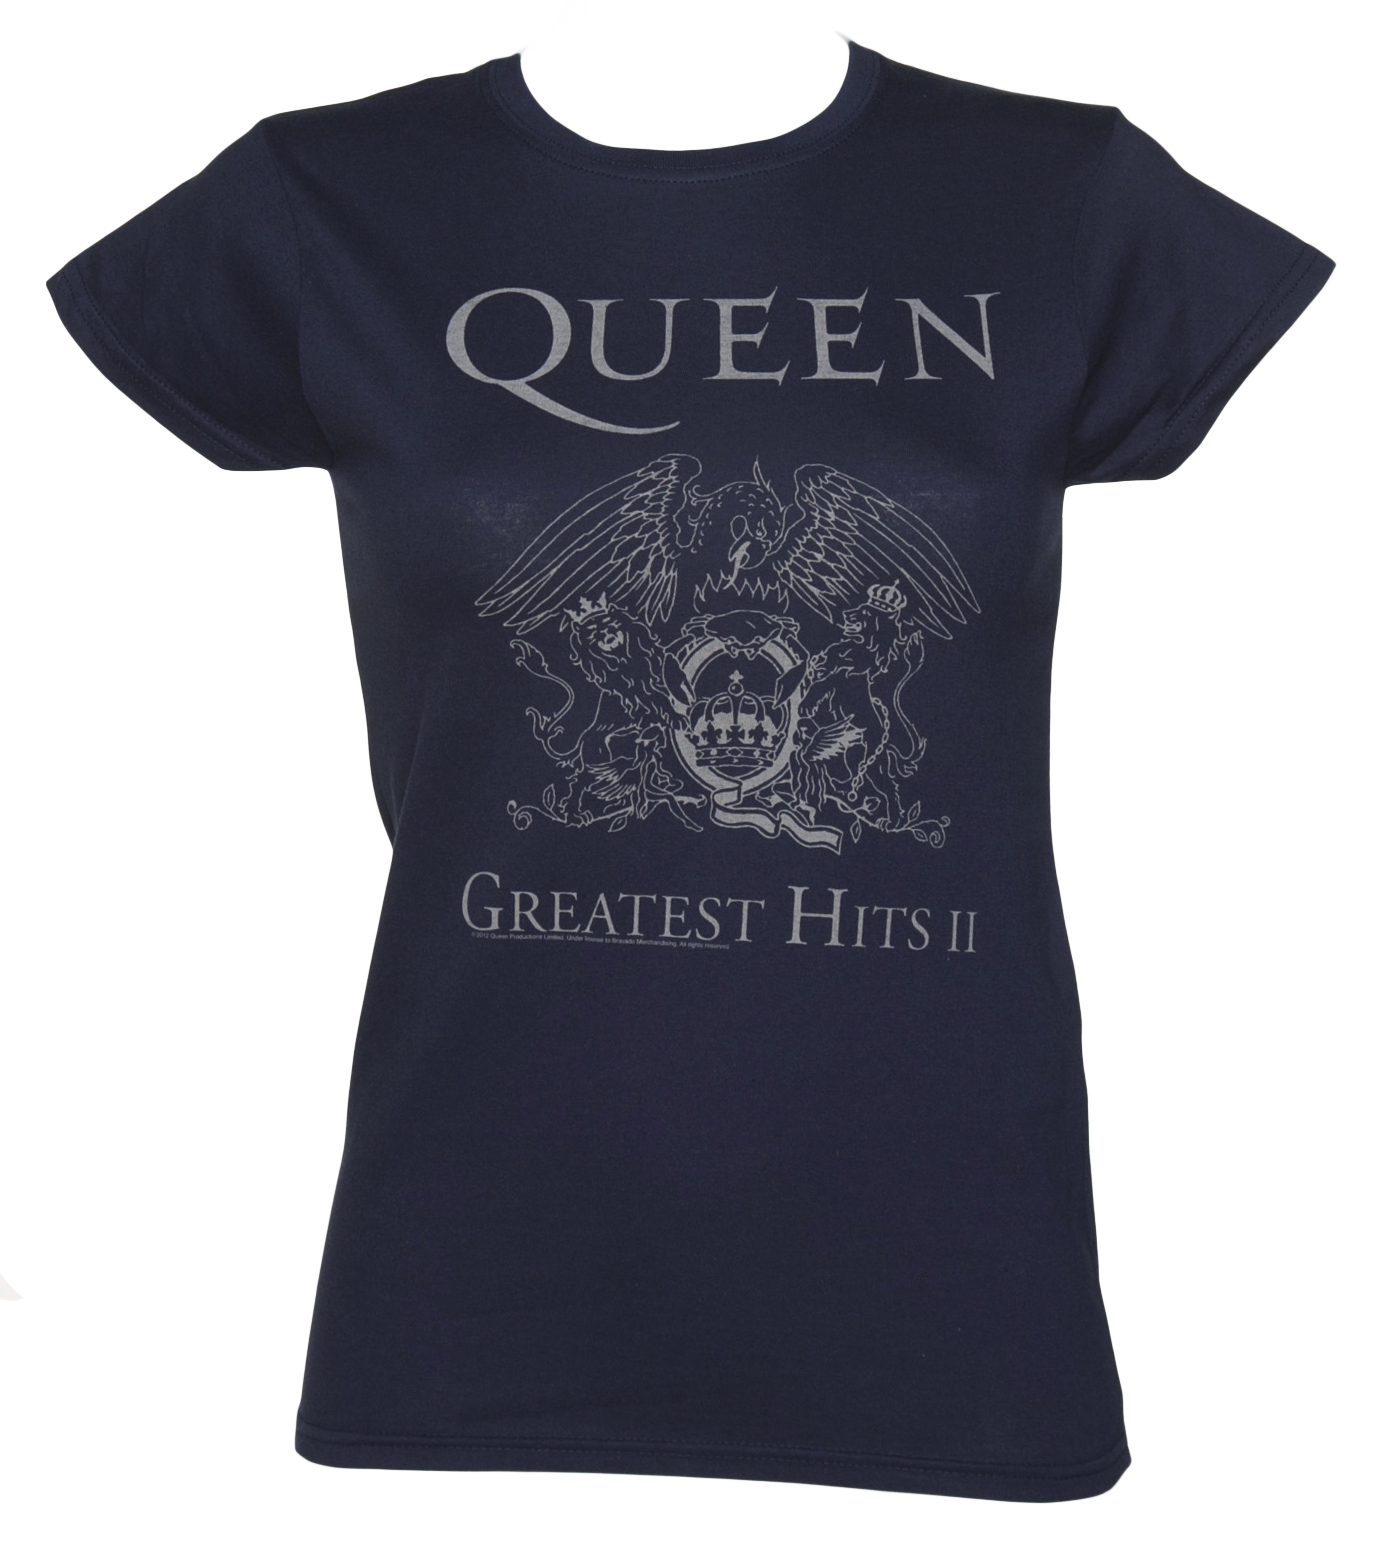 Queen Greatest Hits II T-Shirt